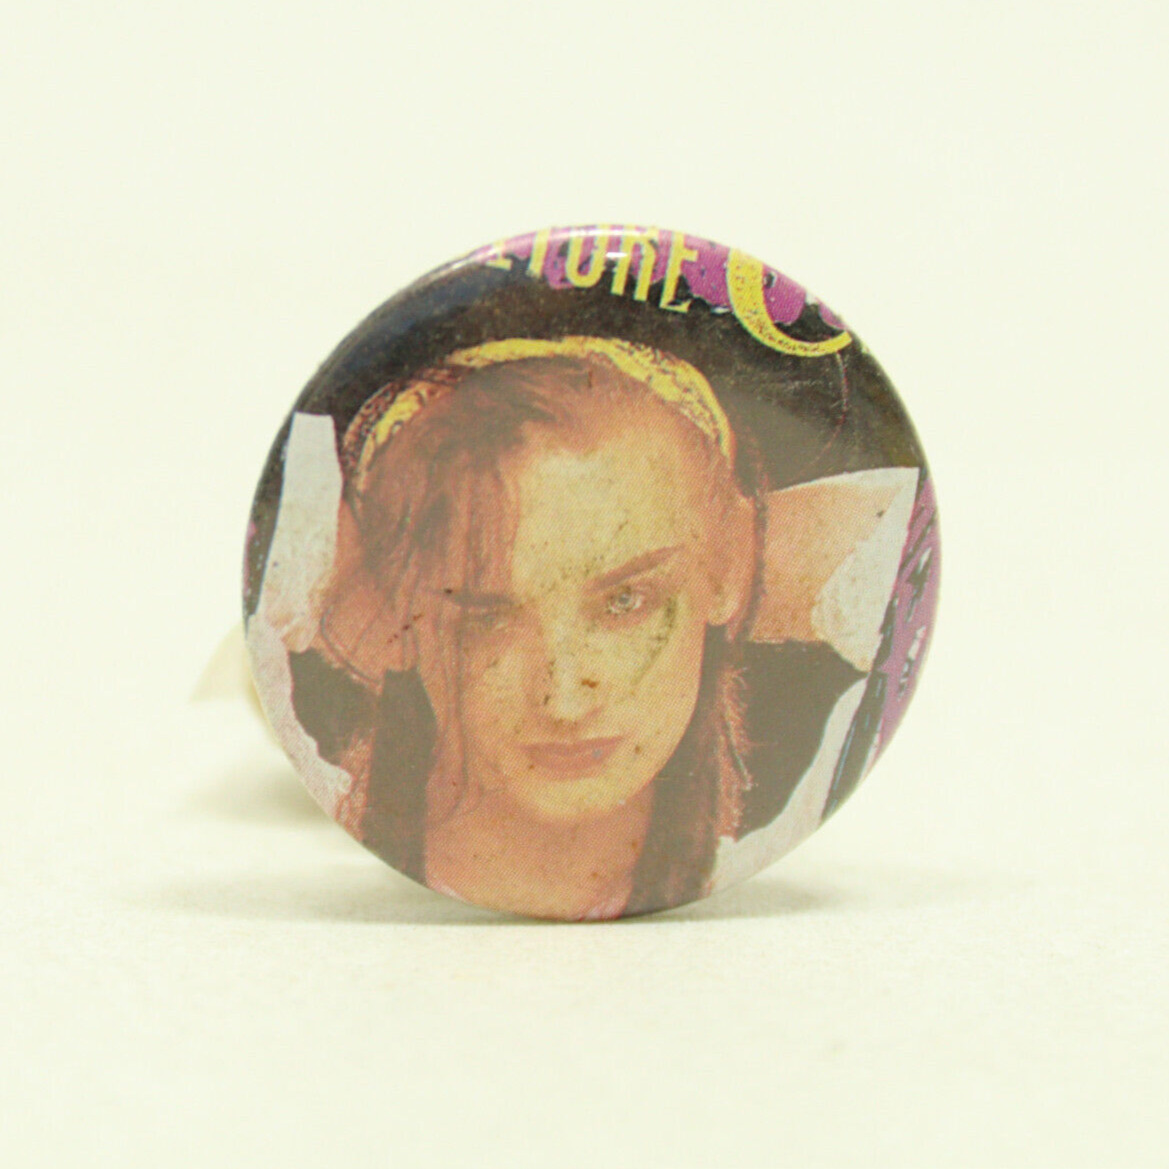 Culture Club Boy George Pin Button Vintage 1980s Pop Badge Pinback #2